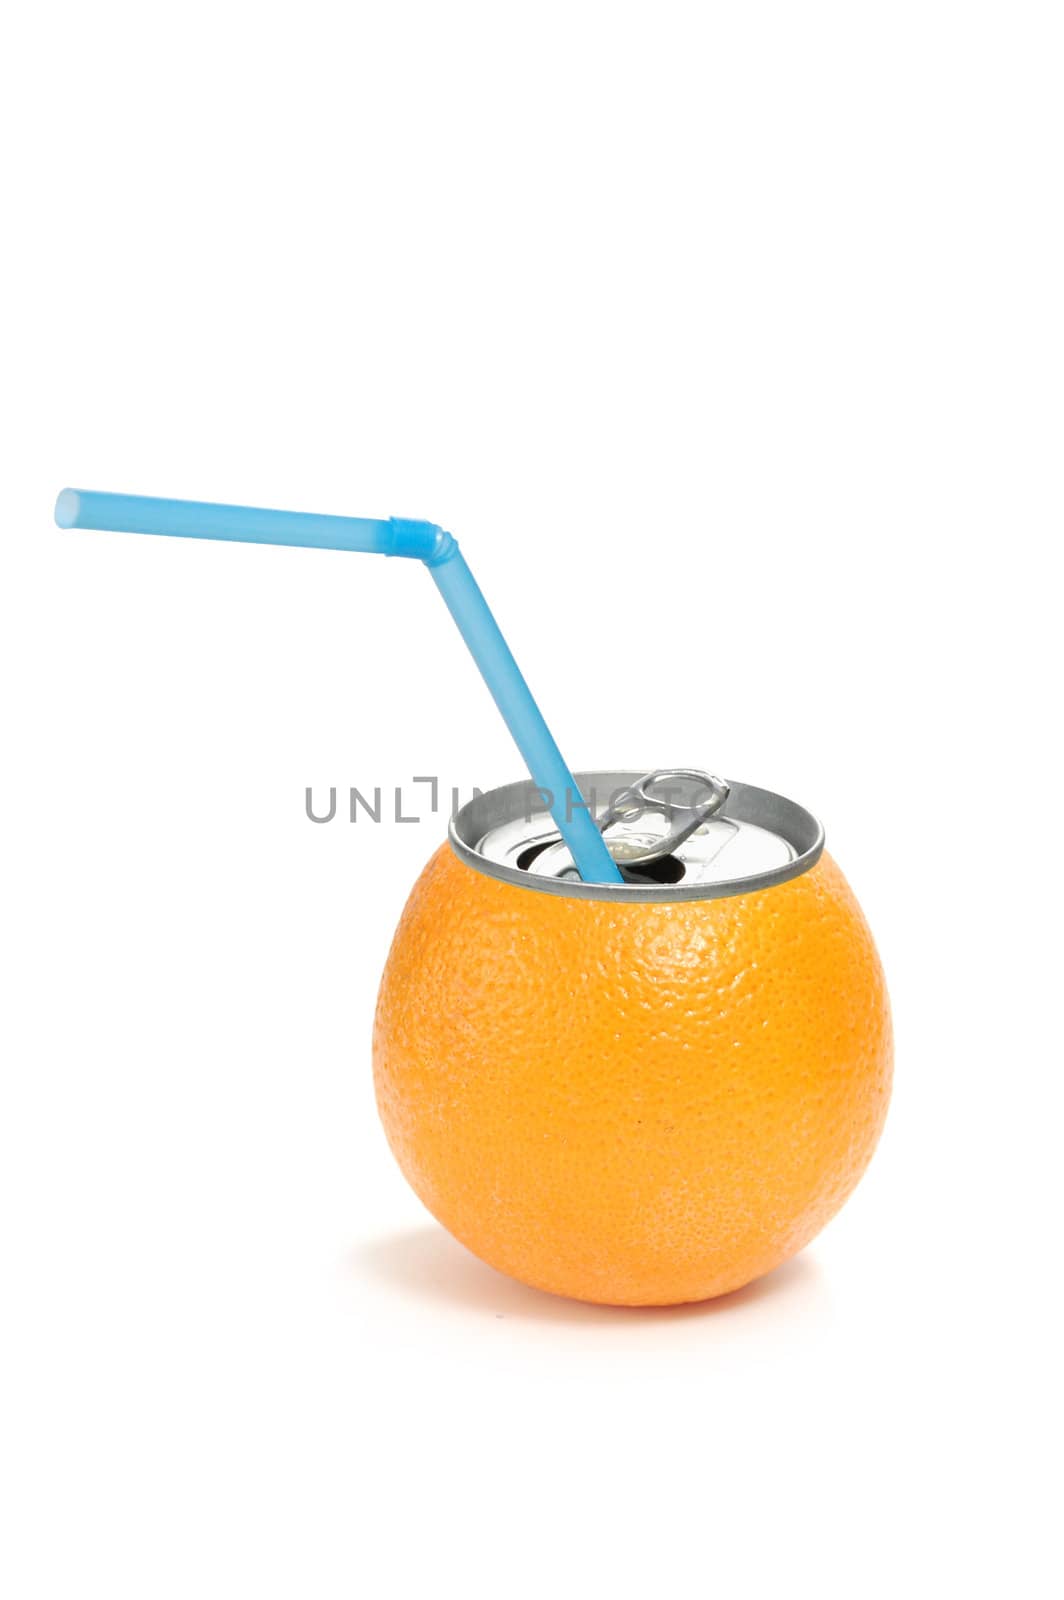 Orange juice can by unikpix